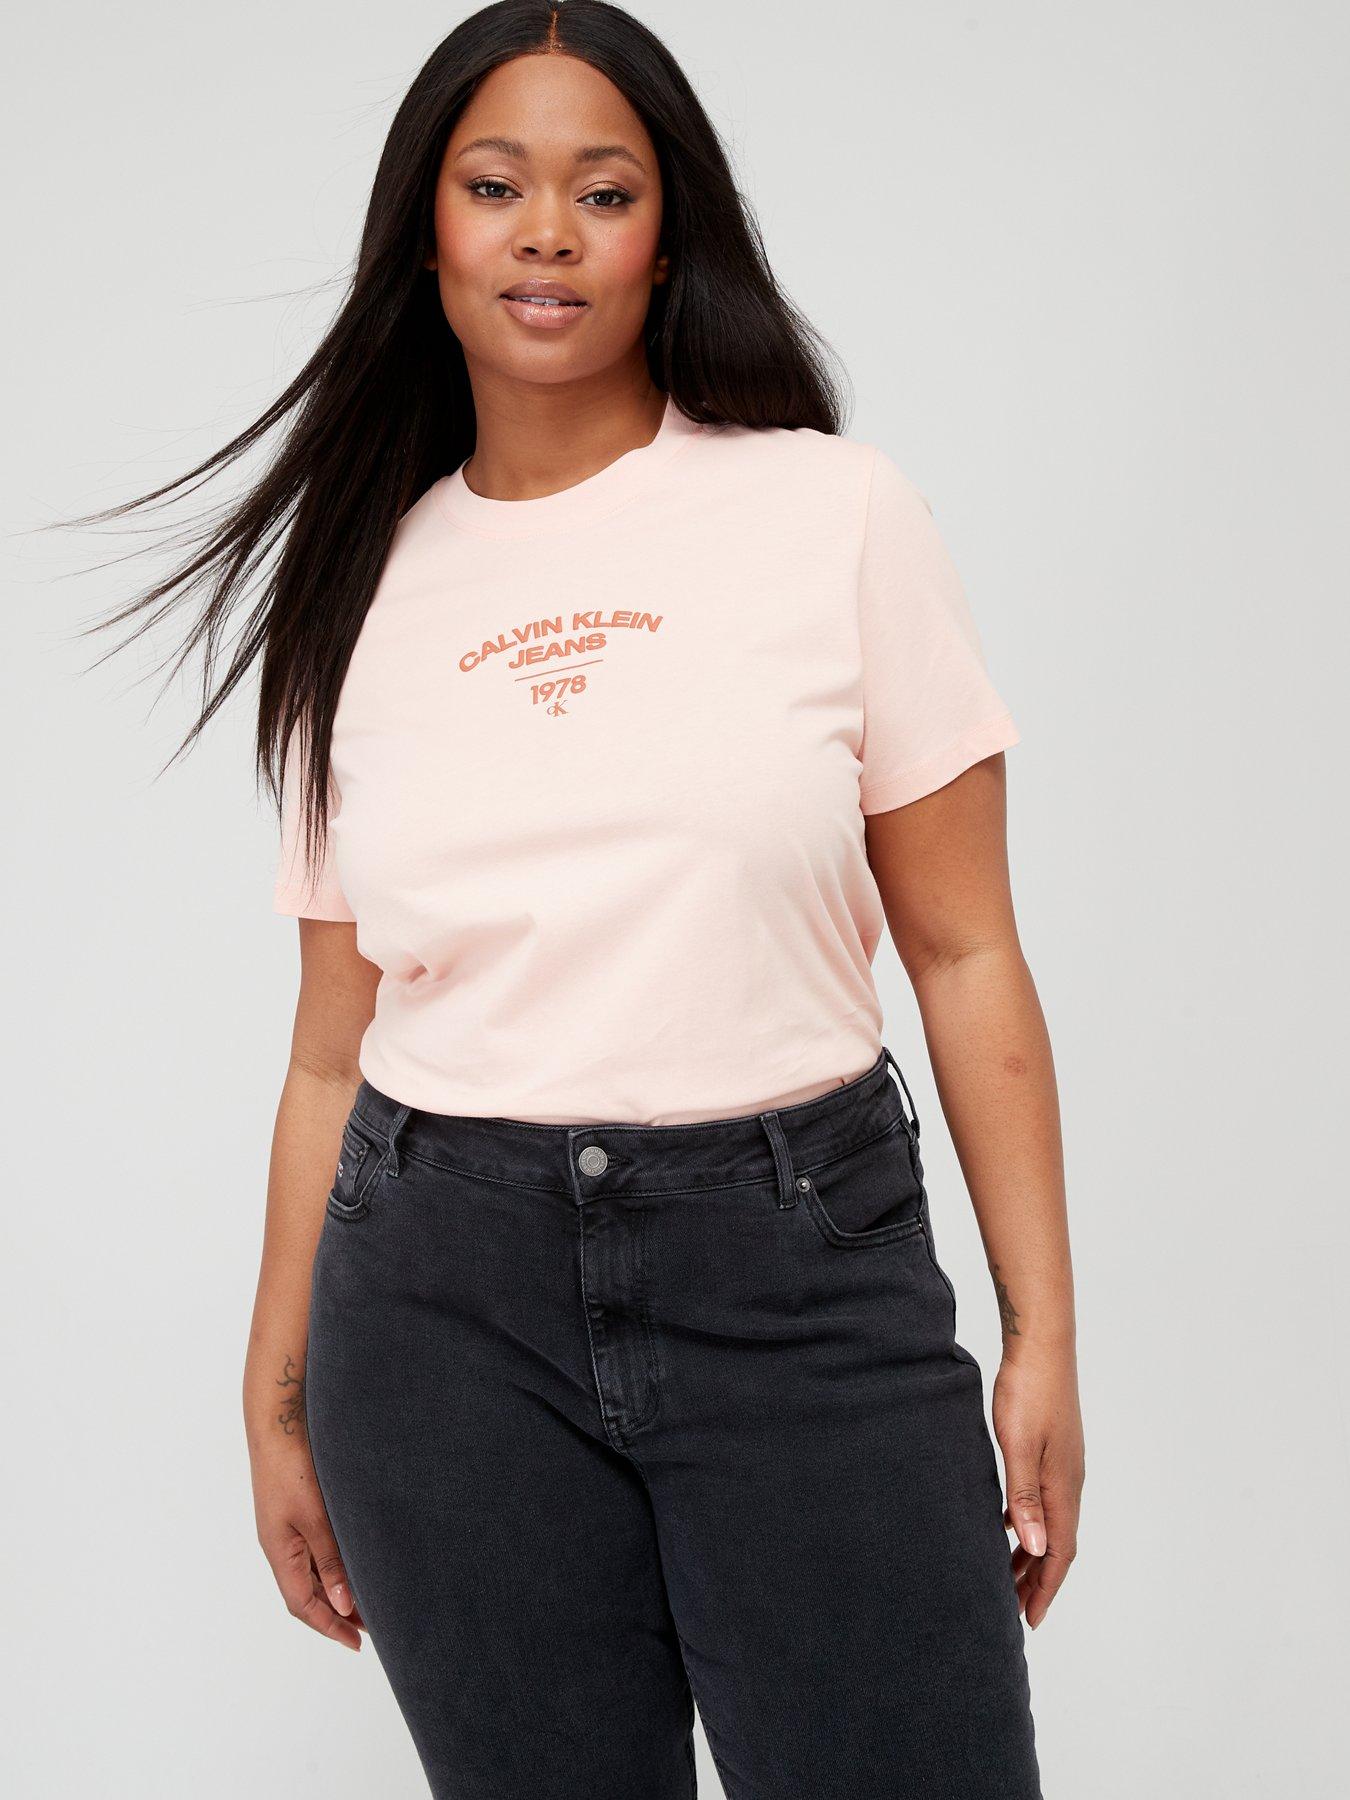 t-shirts Short | | Women Calvin Very klein Tops | Ireland jeans | & Sleeve